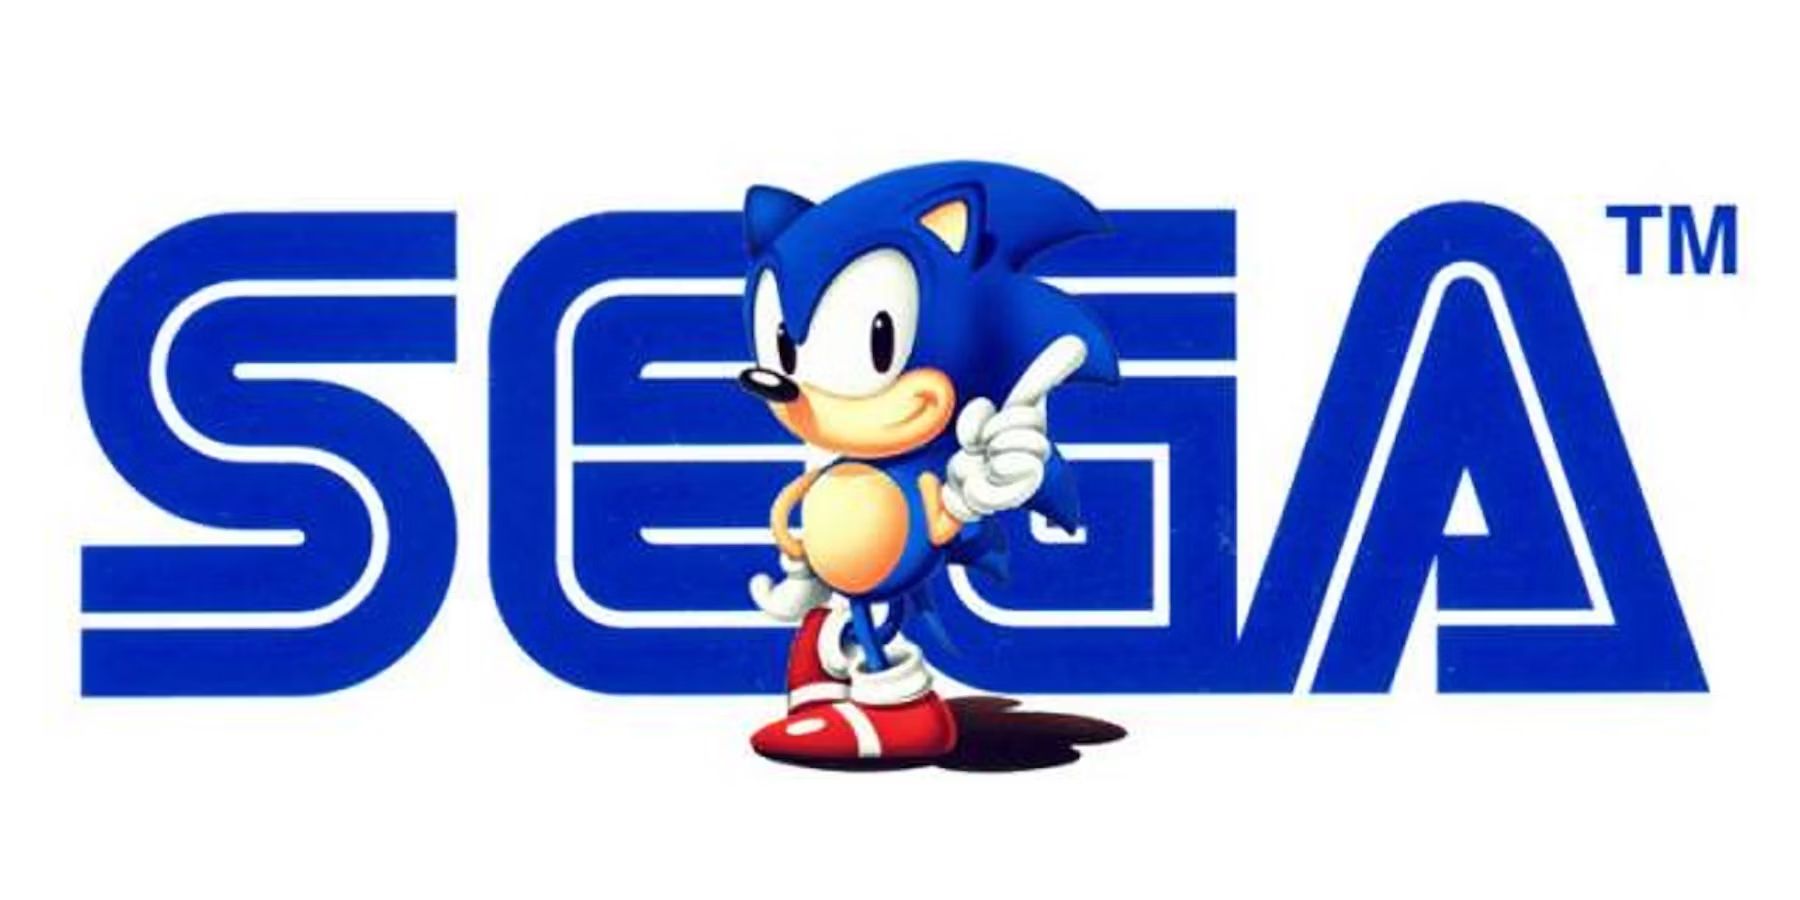 Sega Trademarks More Historic Games Rumor Reboots